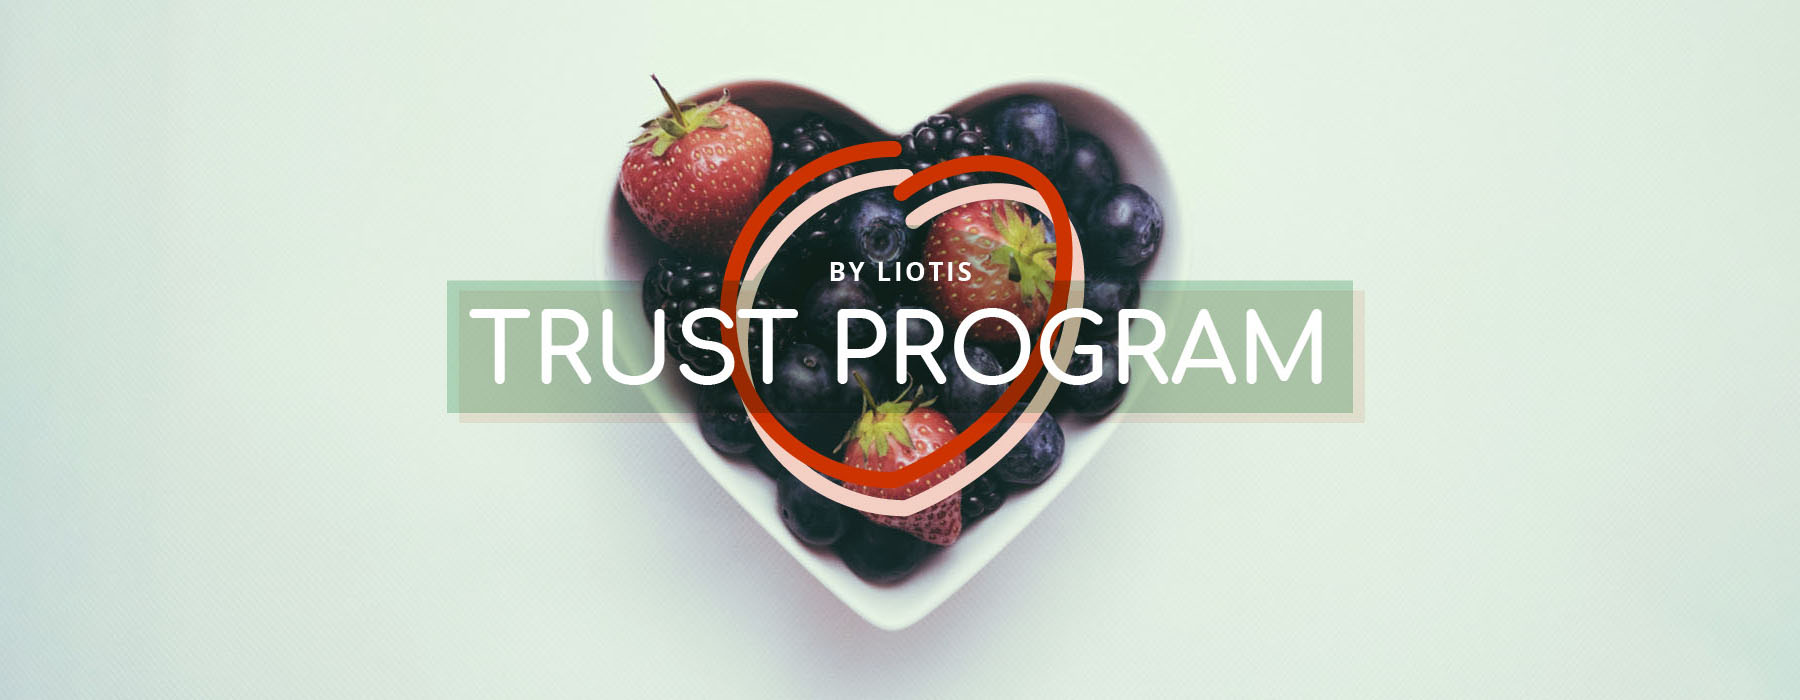 trust program